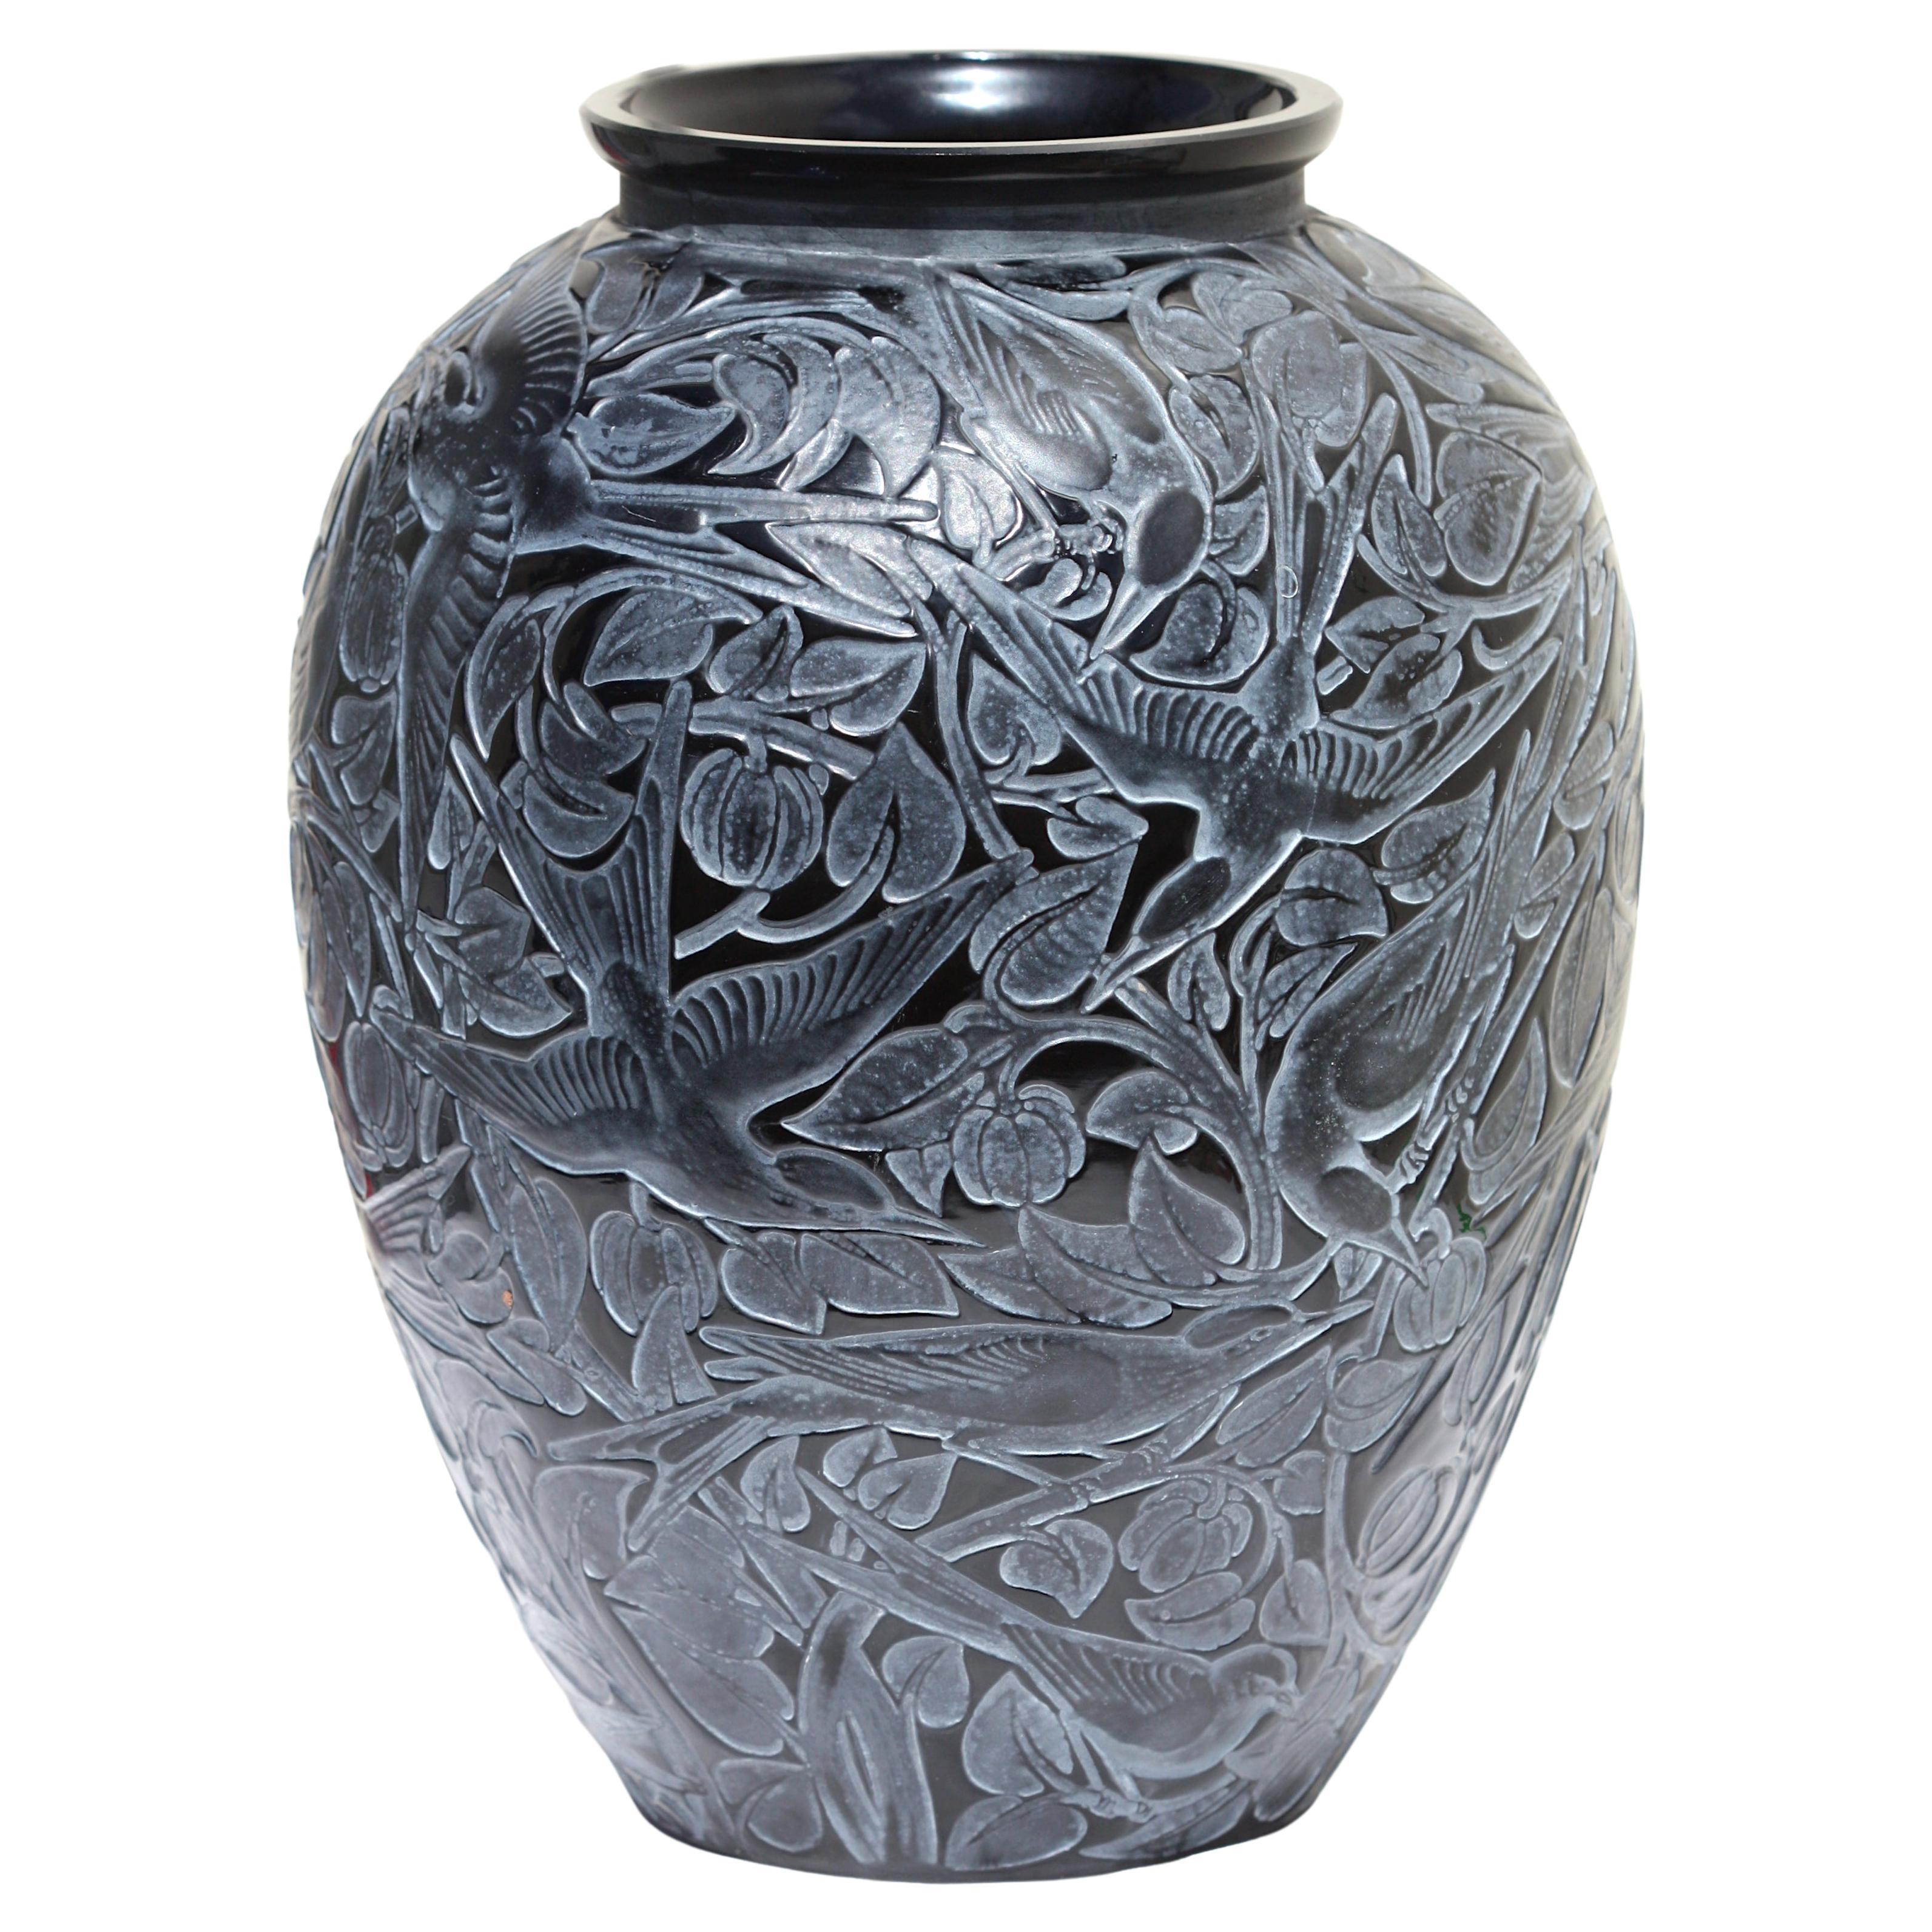 Rene Lalique "Martin-Pecheurs" Black Glass Vase, Marcilhac Reference No 92